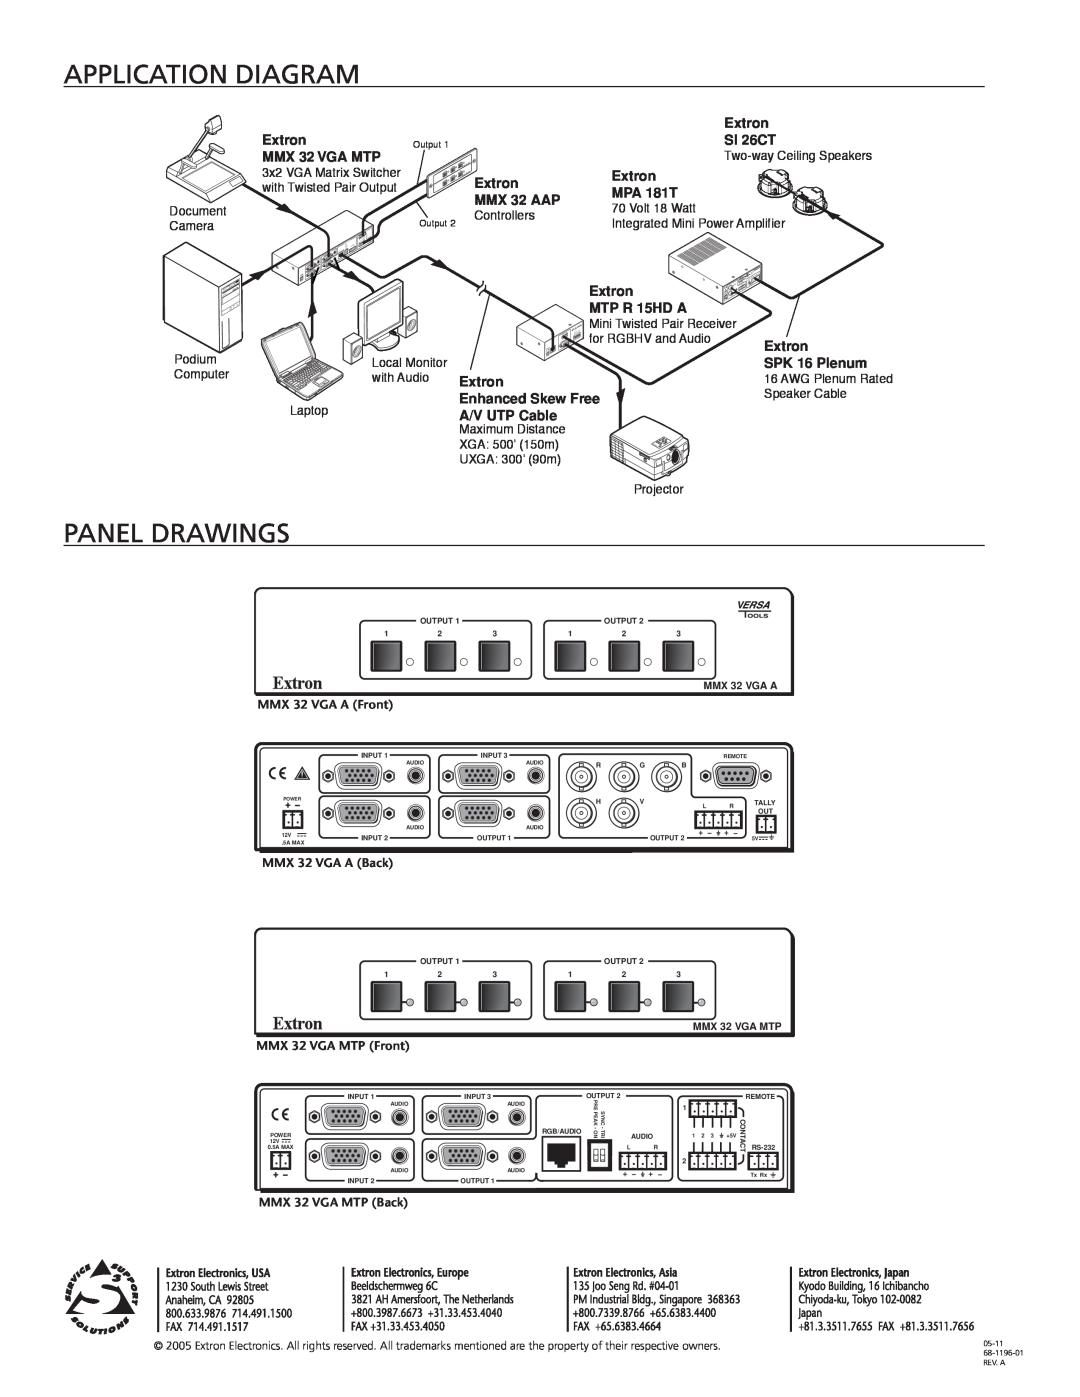 Extron electronic MMX VGA Series manual Application Diagram, Panel drawings, MMX 32 VGA A Front, MMX 32 VGA A Back 